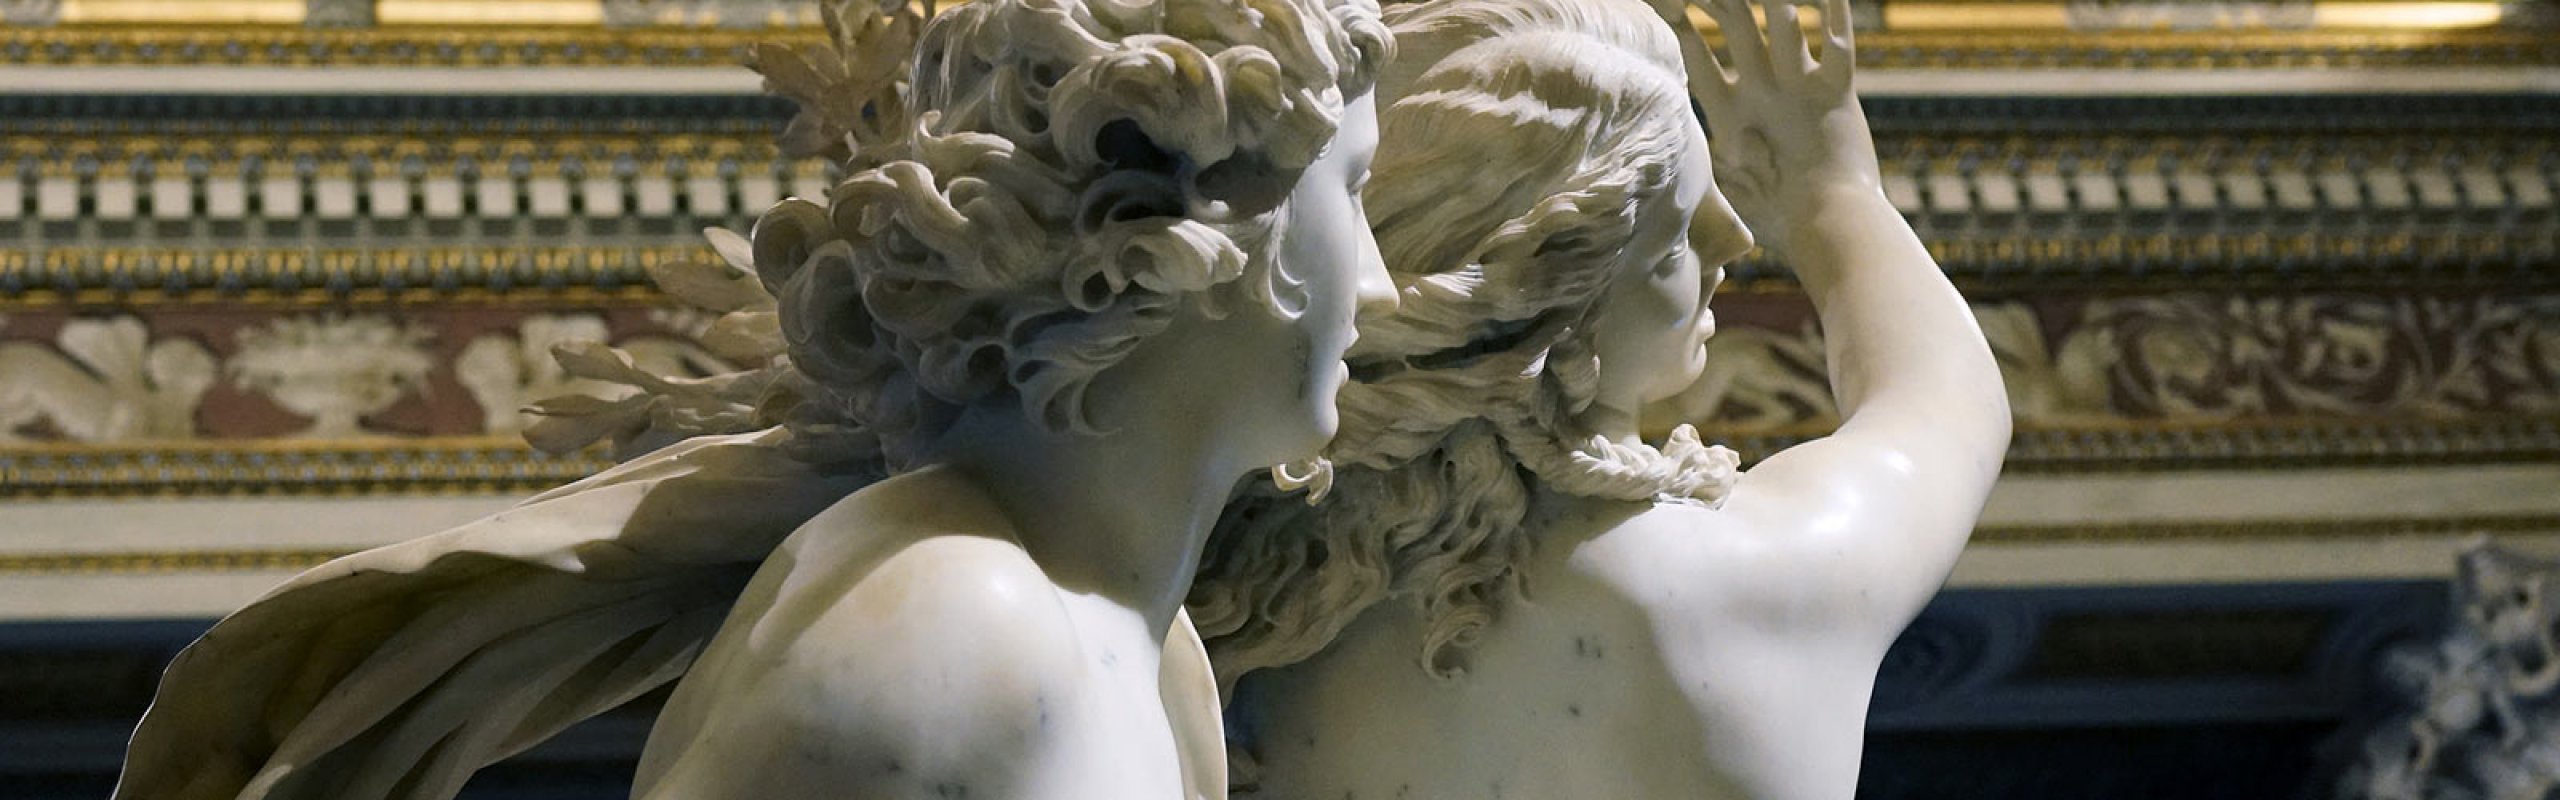 Bernini, Benjamin West and the dirty secrets of art history